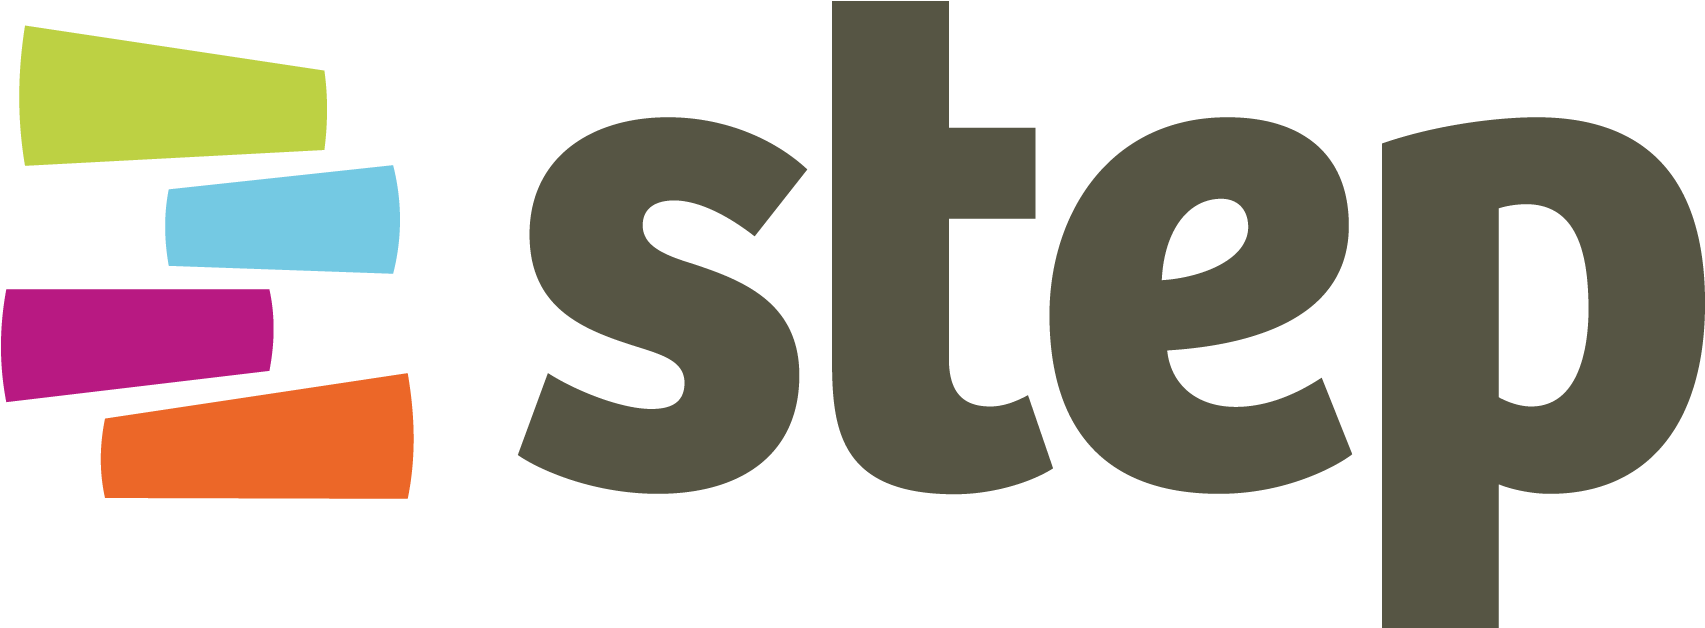 Step Logo Png (2000x1100), Png Download